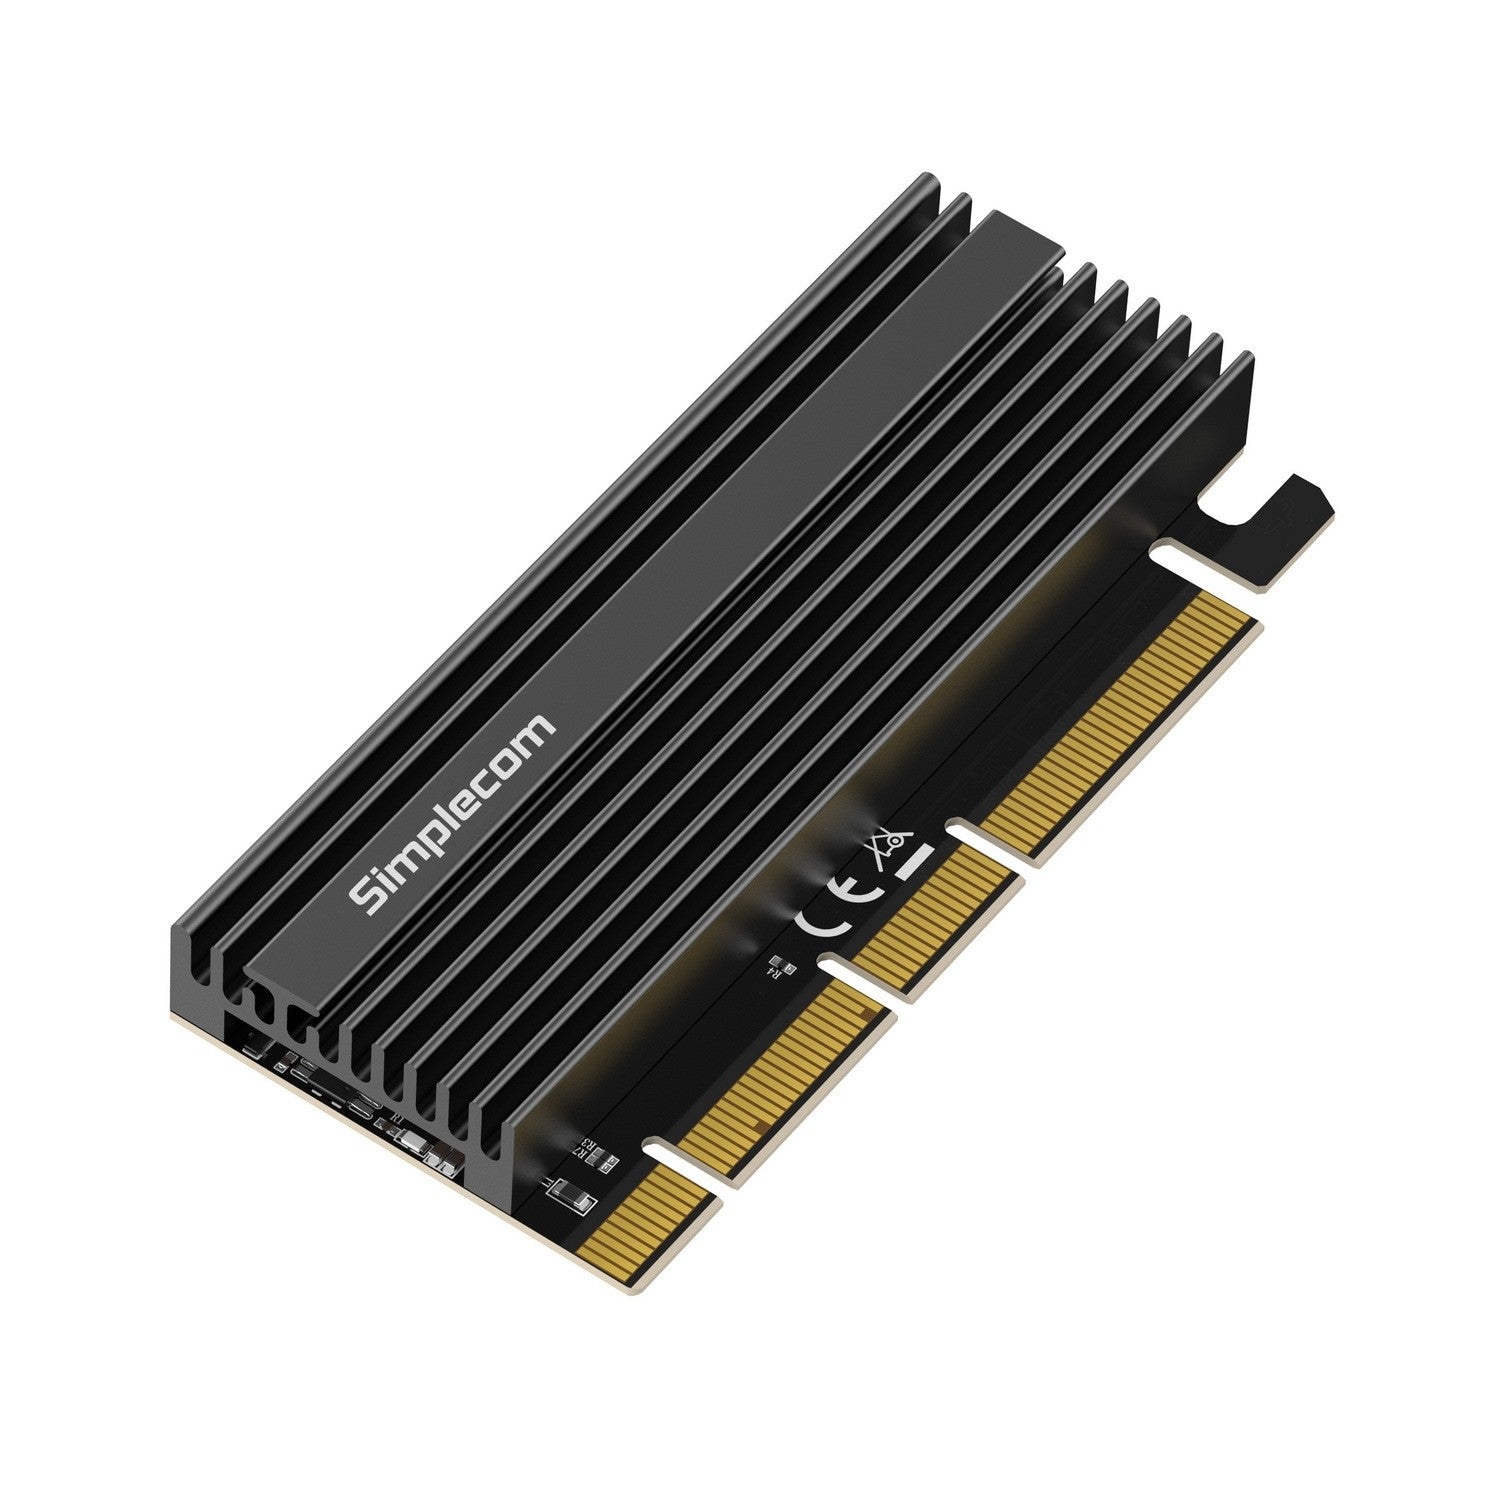 Simplecom NVMe M.2 SSD to PCIe x4 x8 x16 Expansion Card Black